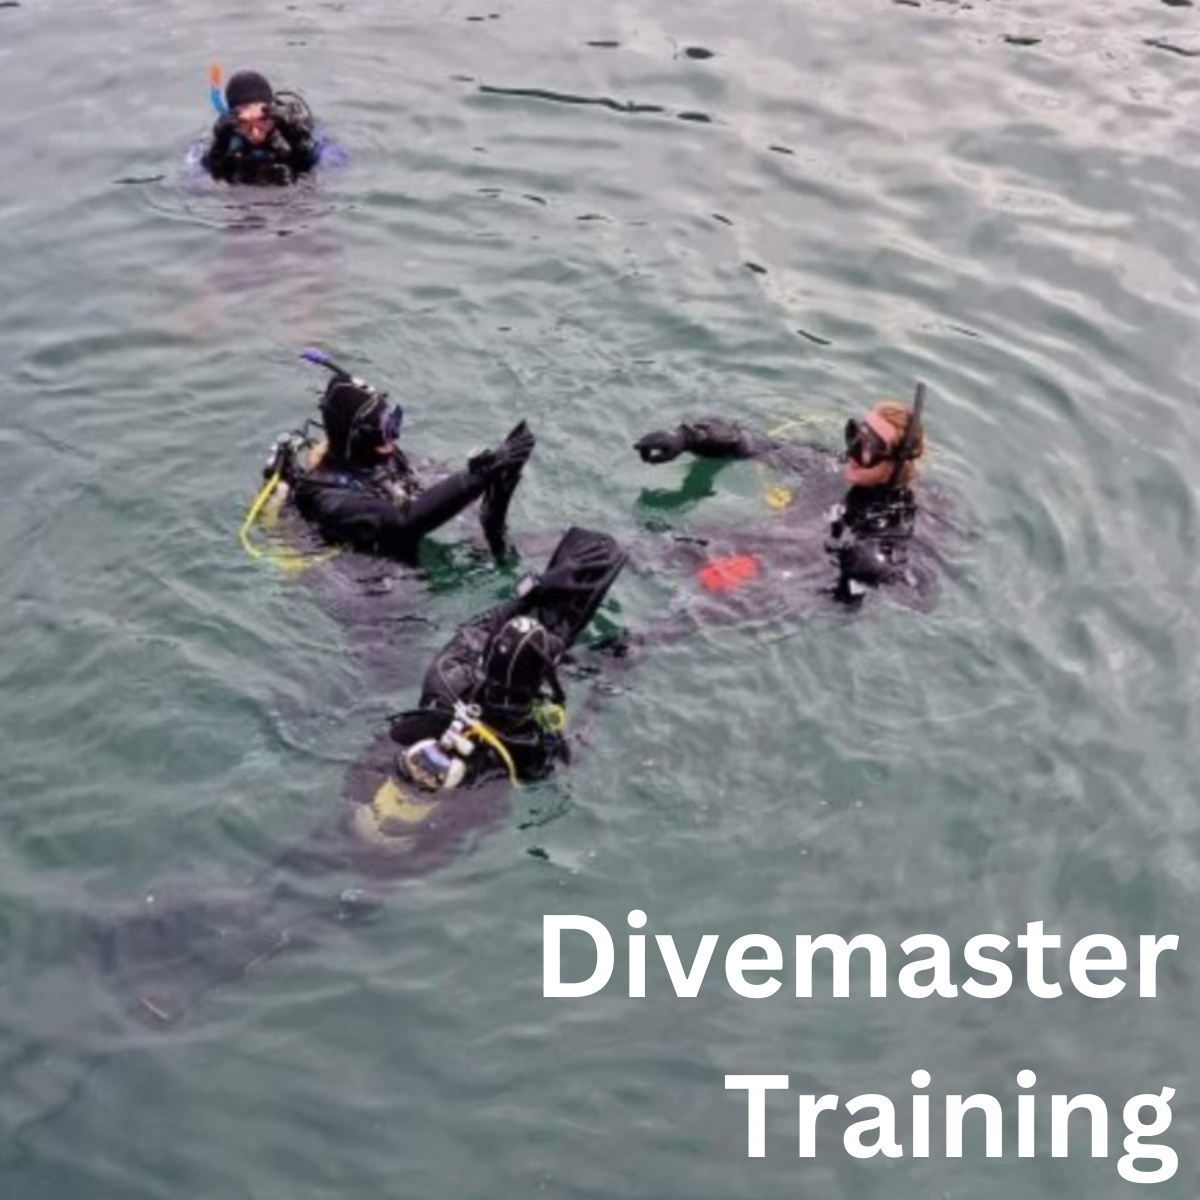 Divemaster Trainee - Training Day